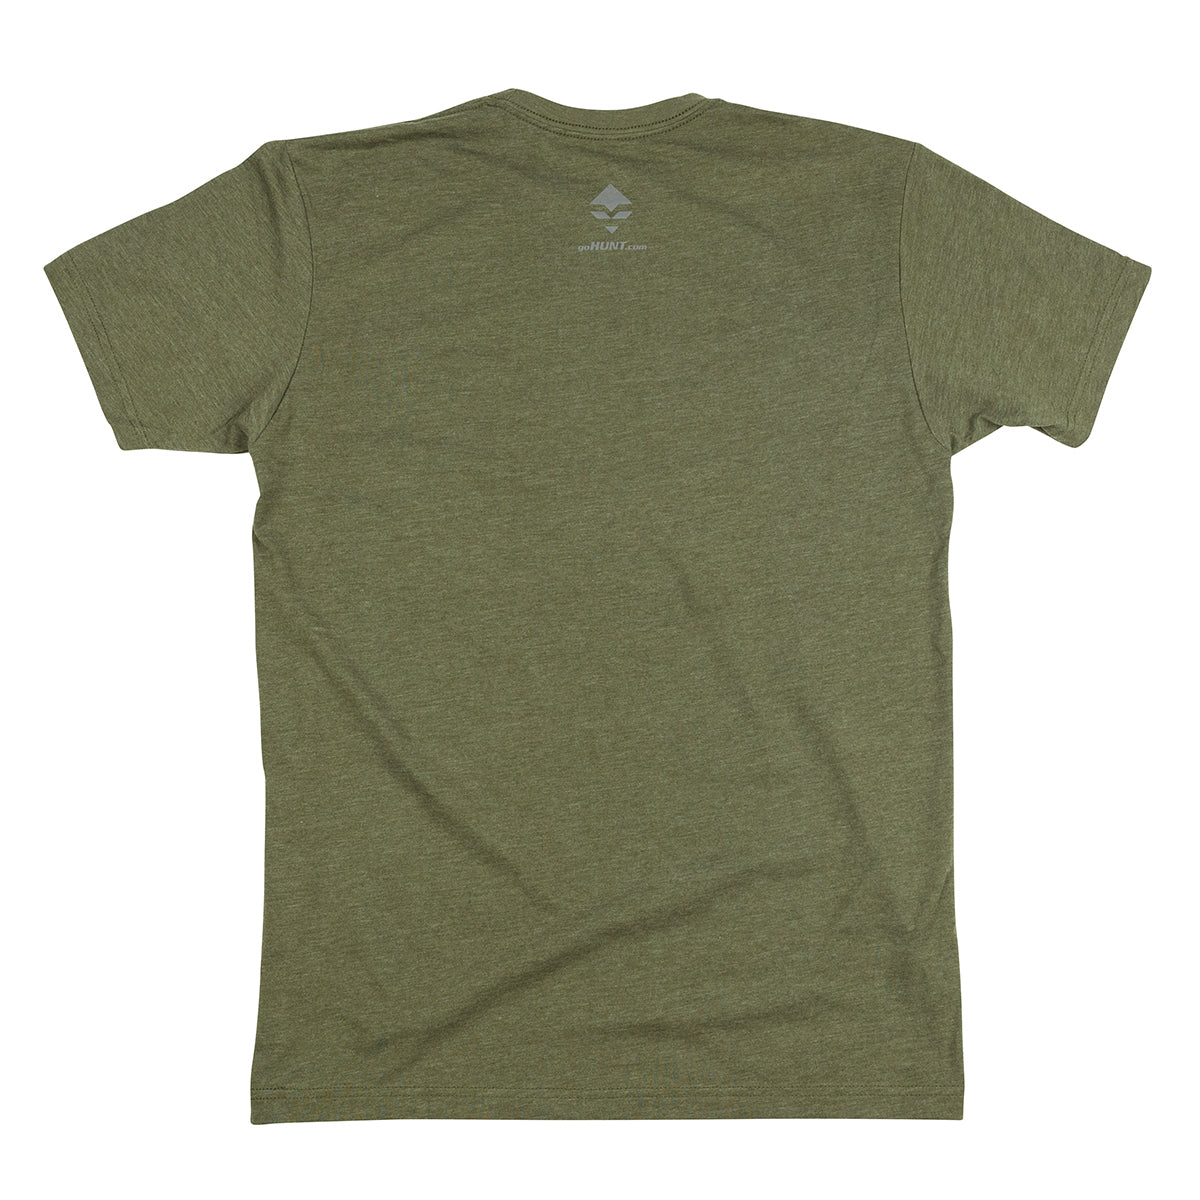 GOHUNT Green & Gray T-Shirt in goHUNT Green & Gray T-Shirt - goHUNT Shop by GOHUNT | GOHUNT - GOHUNT Shop